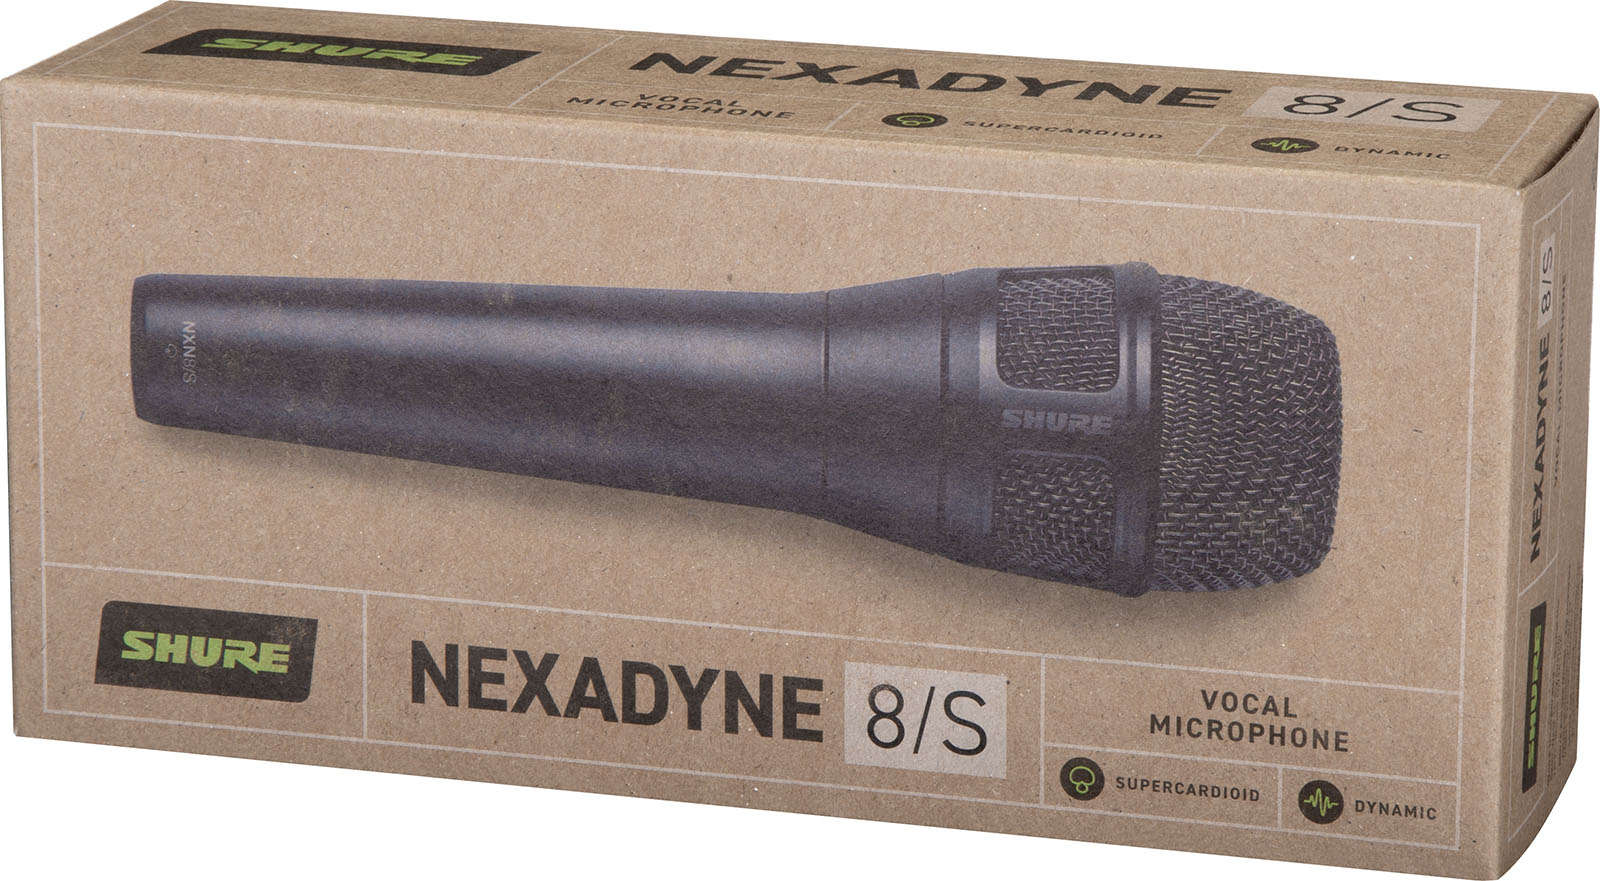 Shure Nexadyne 8/s - Vocal microphones - Variation 2